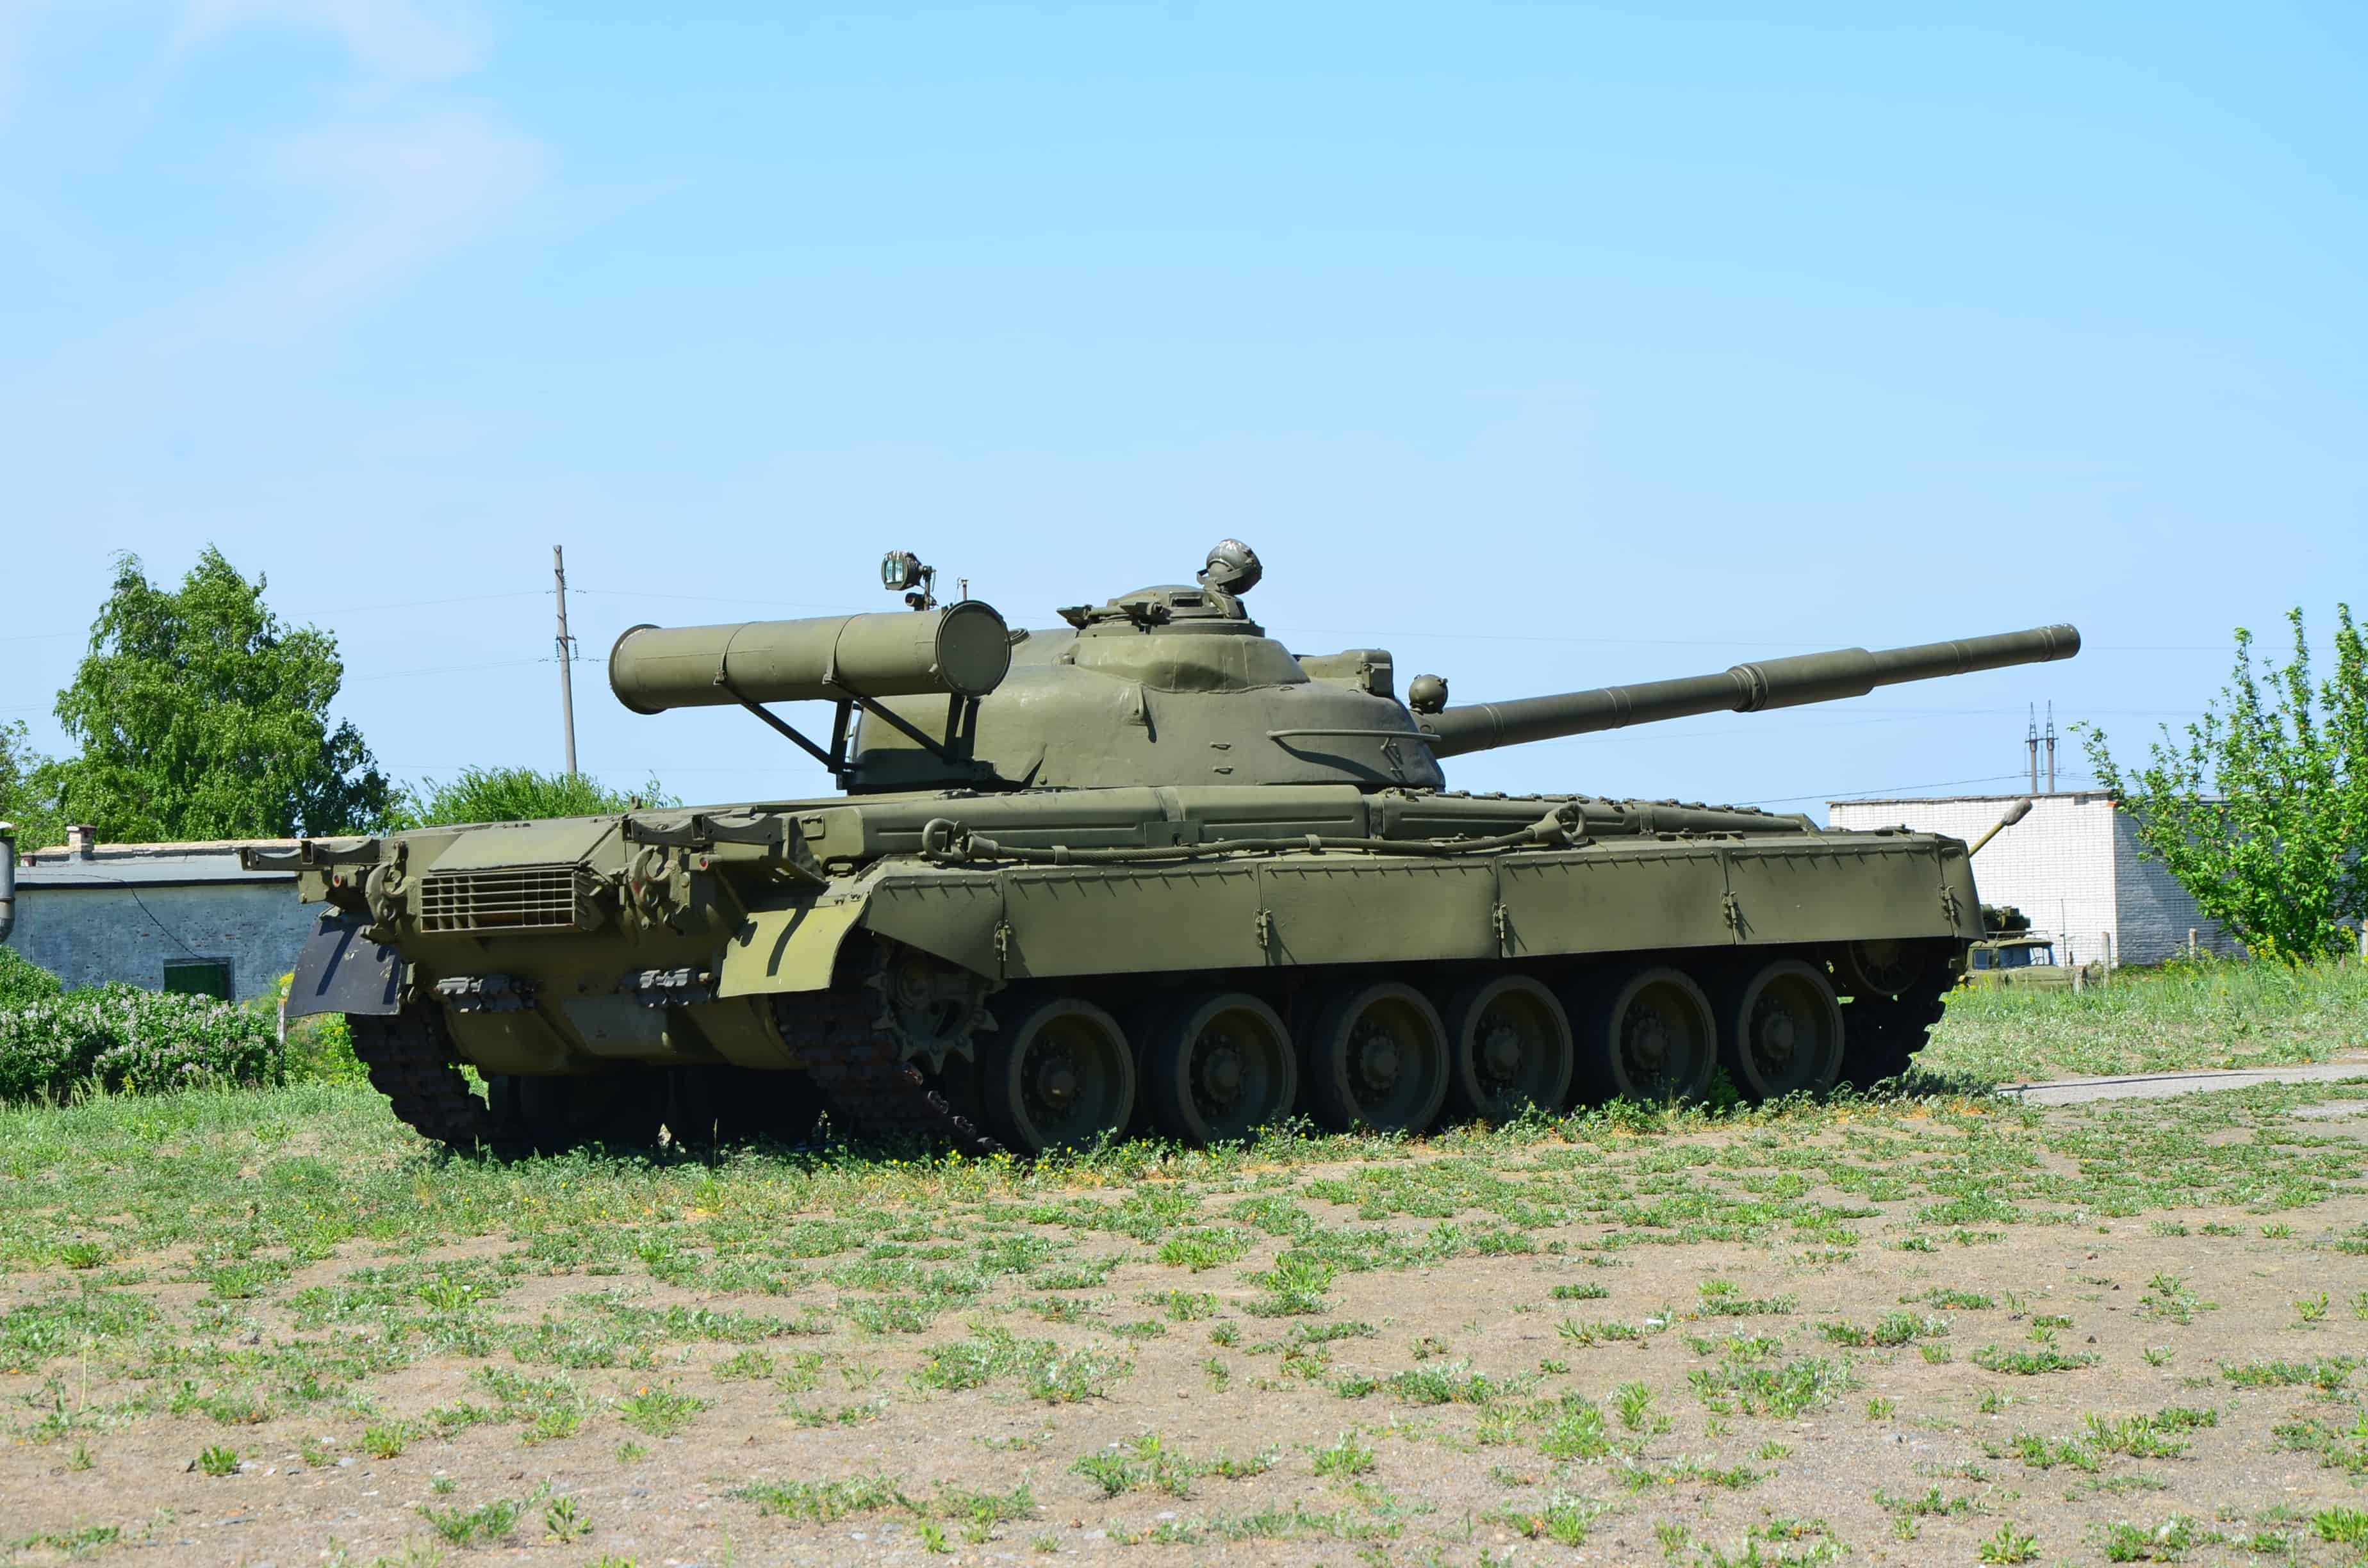 Tank at Strategic Missile Forces Museum near Pobuzke, Ukraine